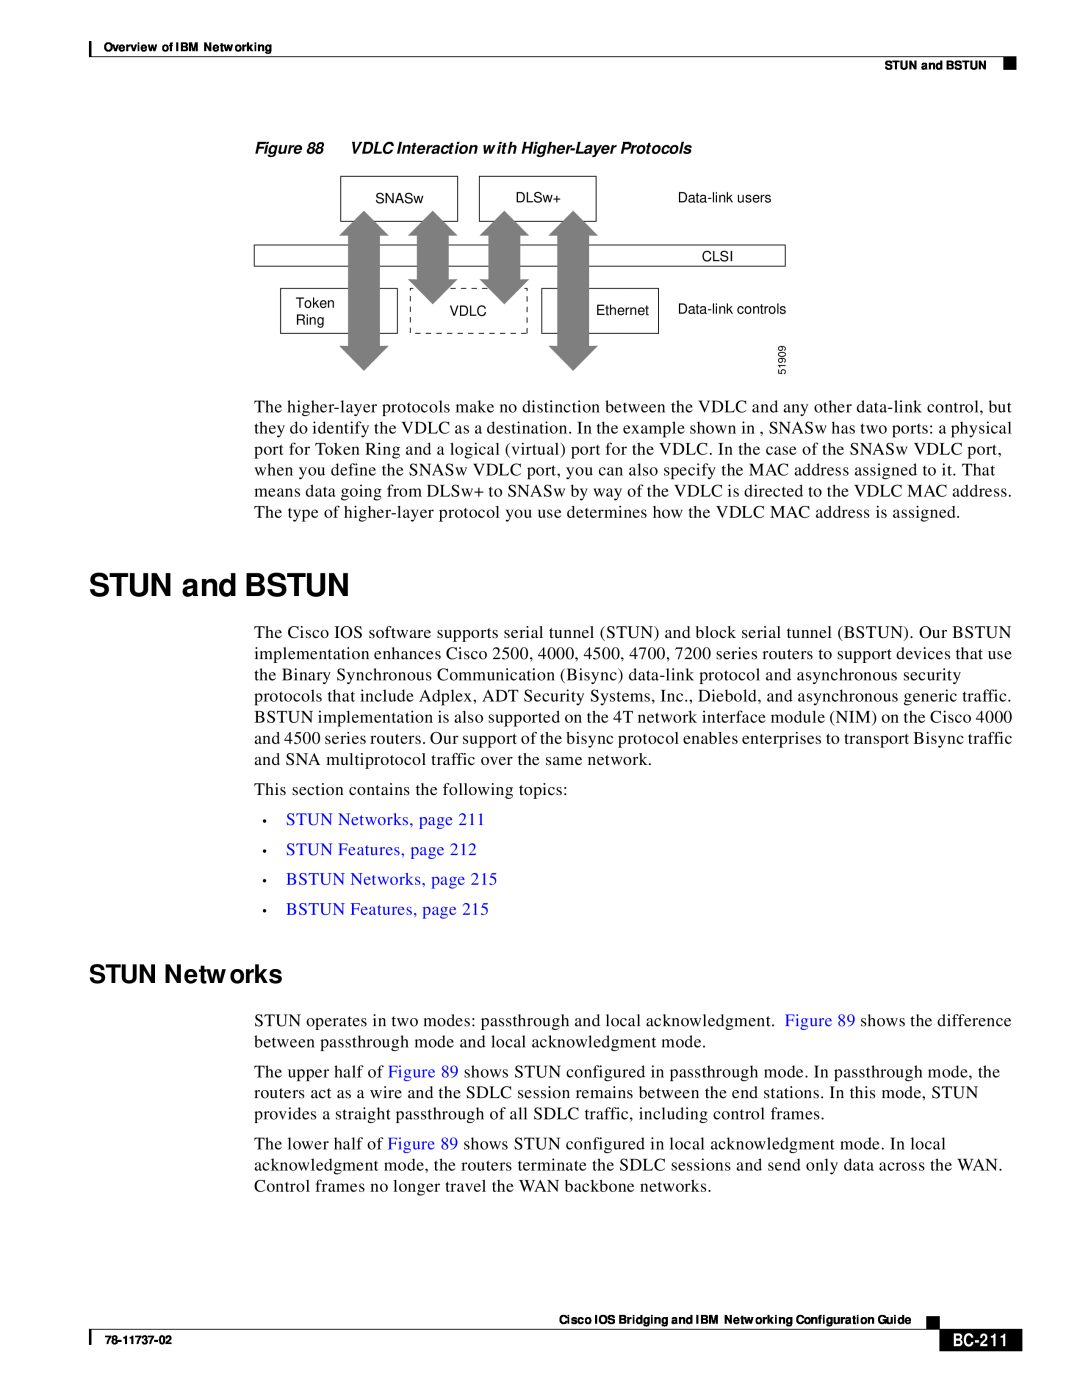 IBM BC-201 STUN and BSTUN, STUN Networks, page STUN Features, page BSTUN Networks, page, BSTUN Features, page, BC-211 